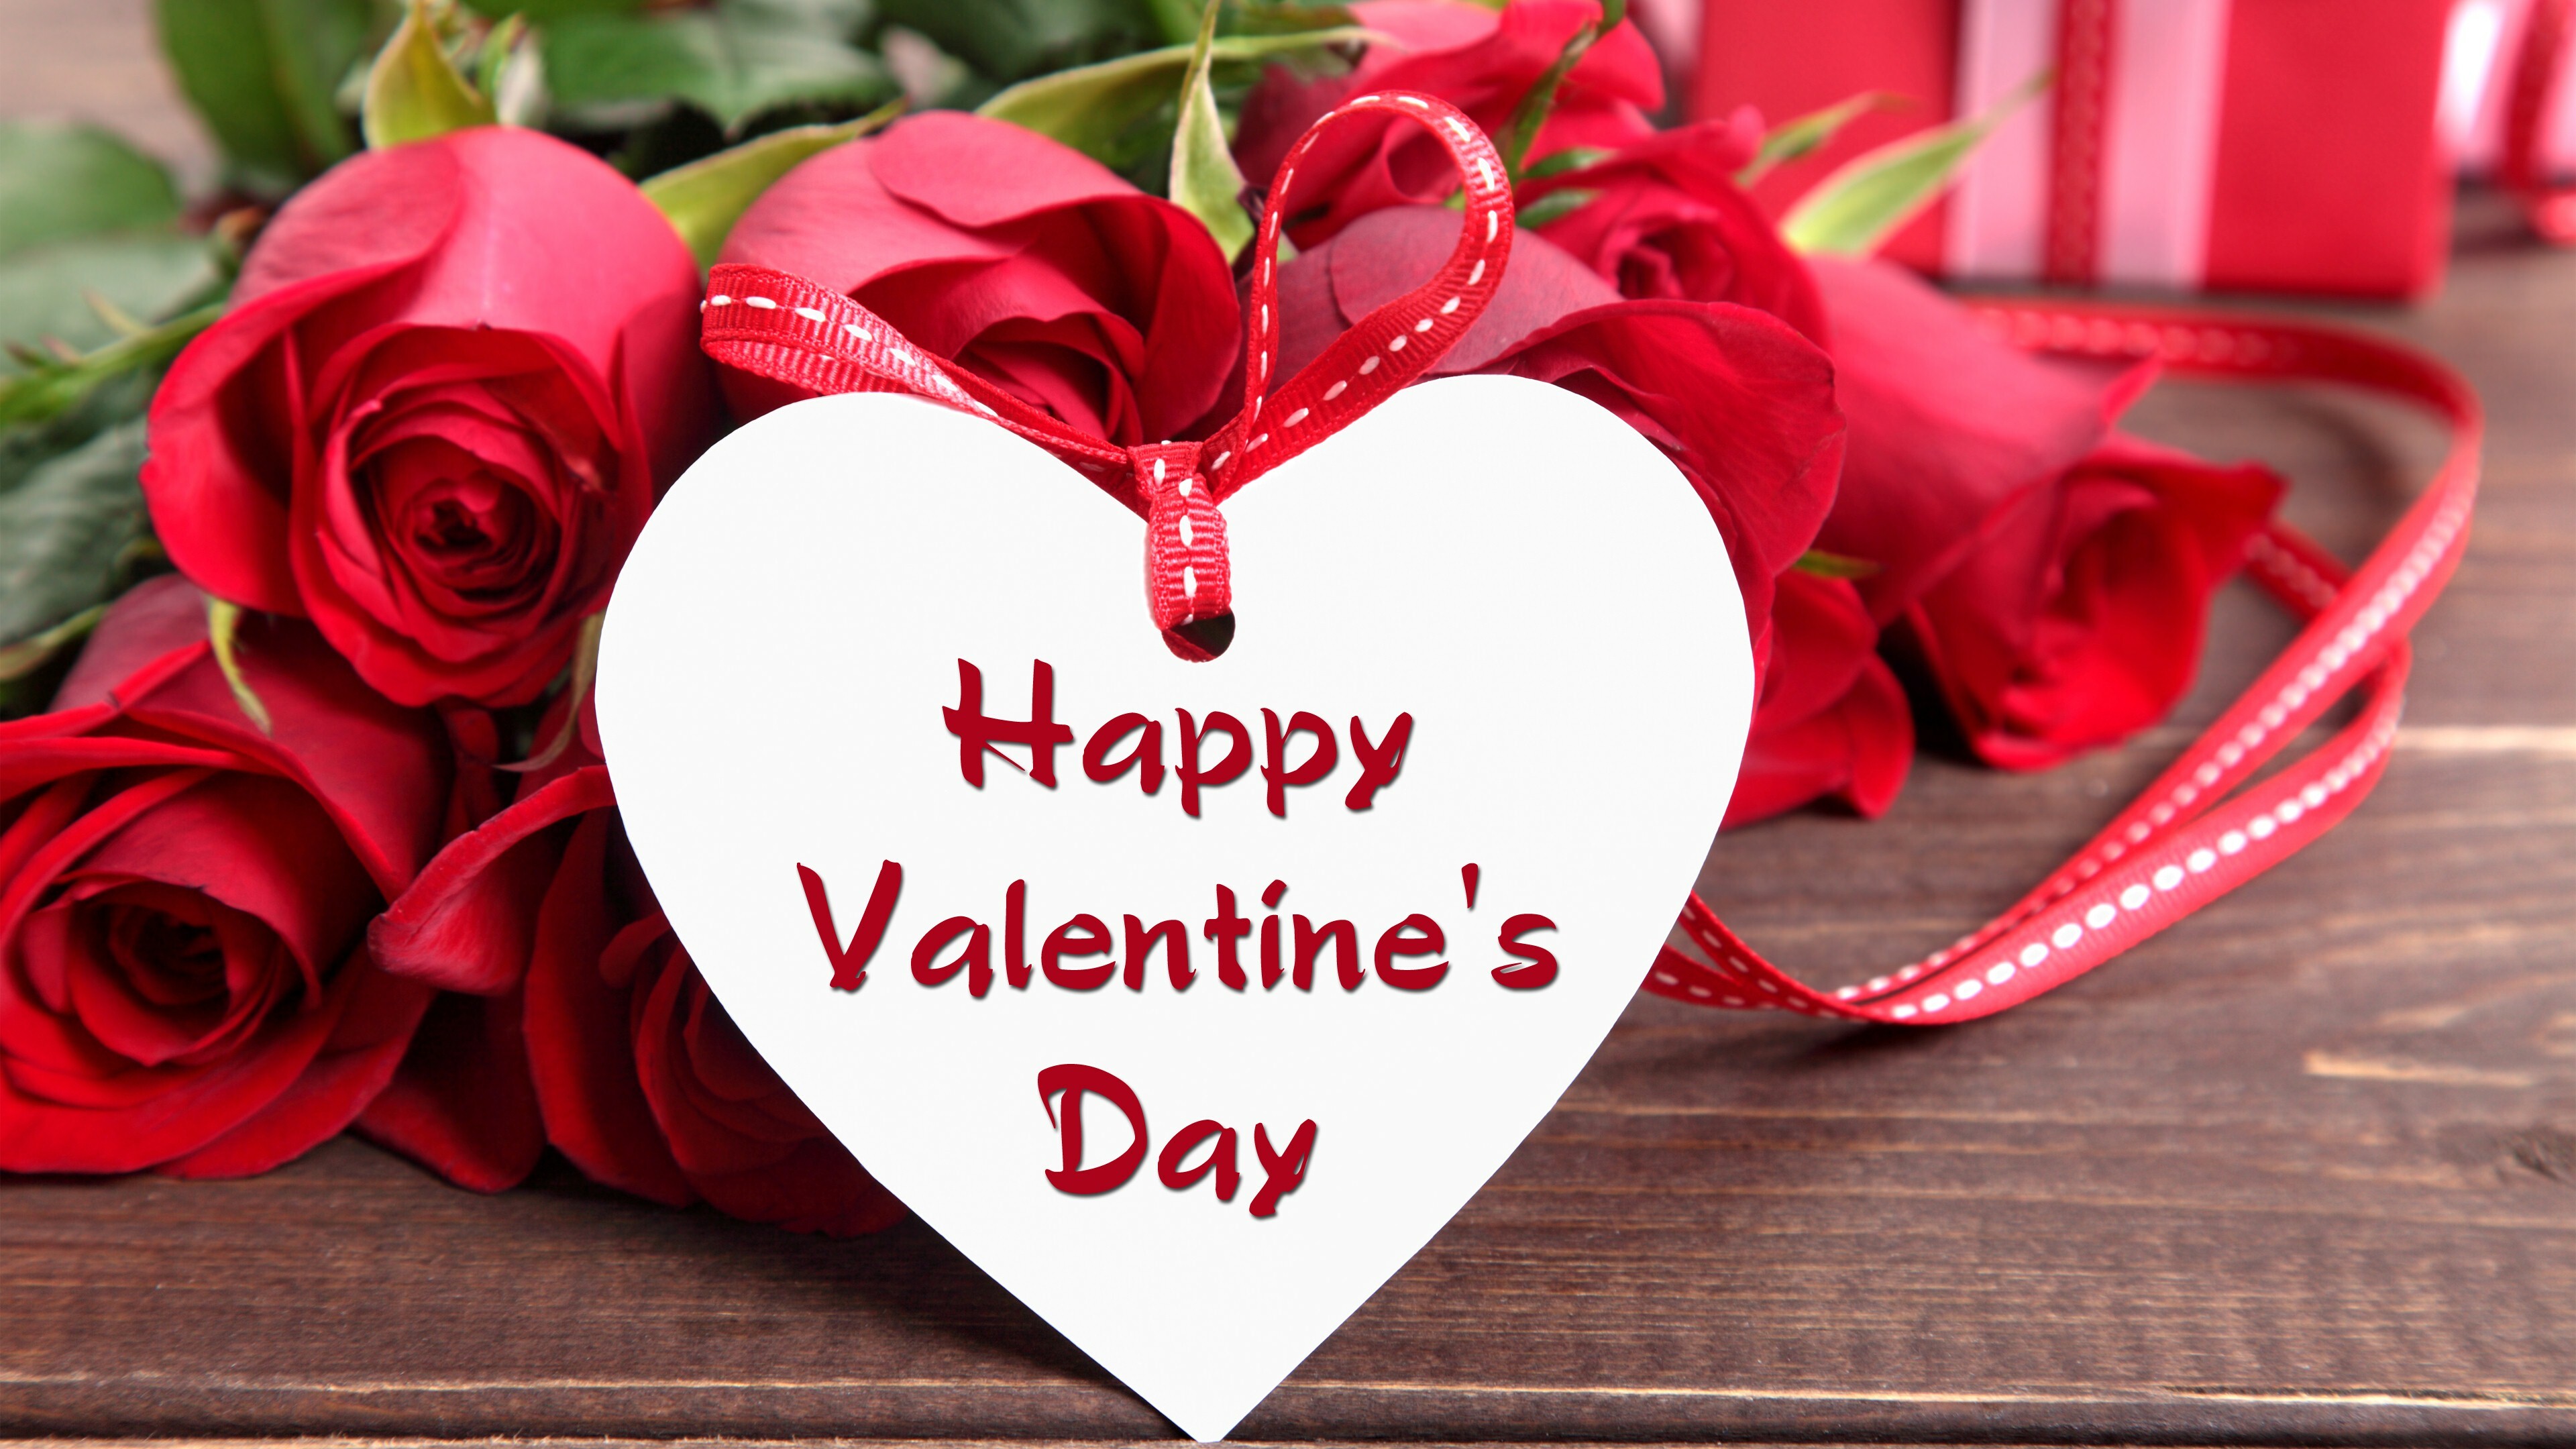 Valentine's Day: Roses, Love notes, Festive celebration. 3840x2160 4K Background.